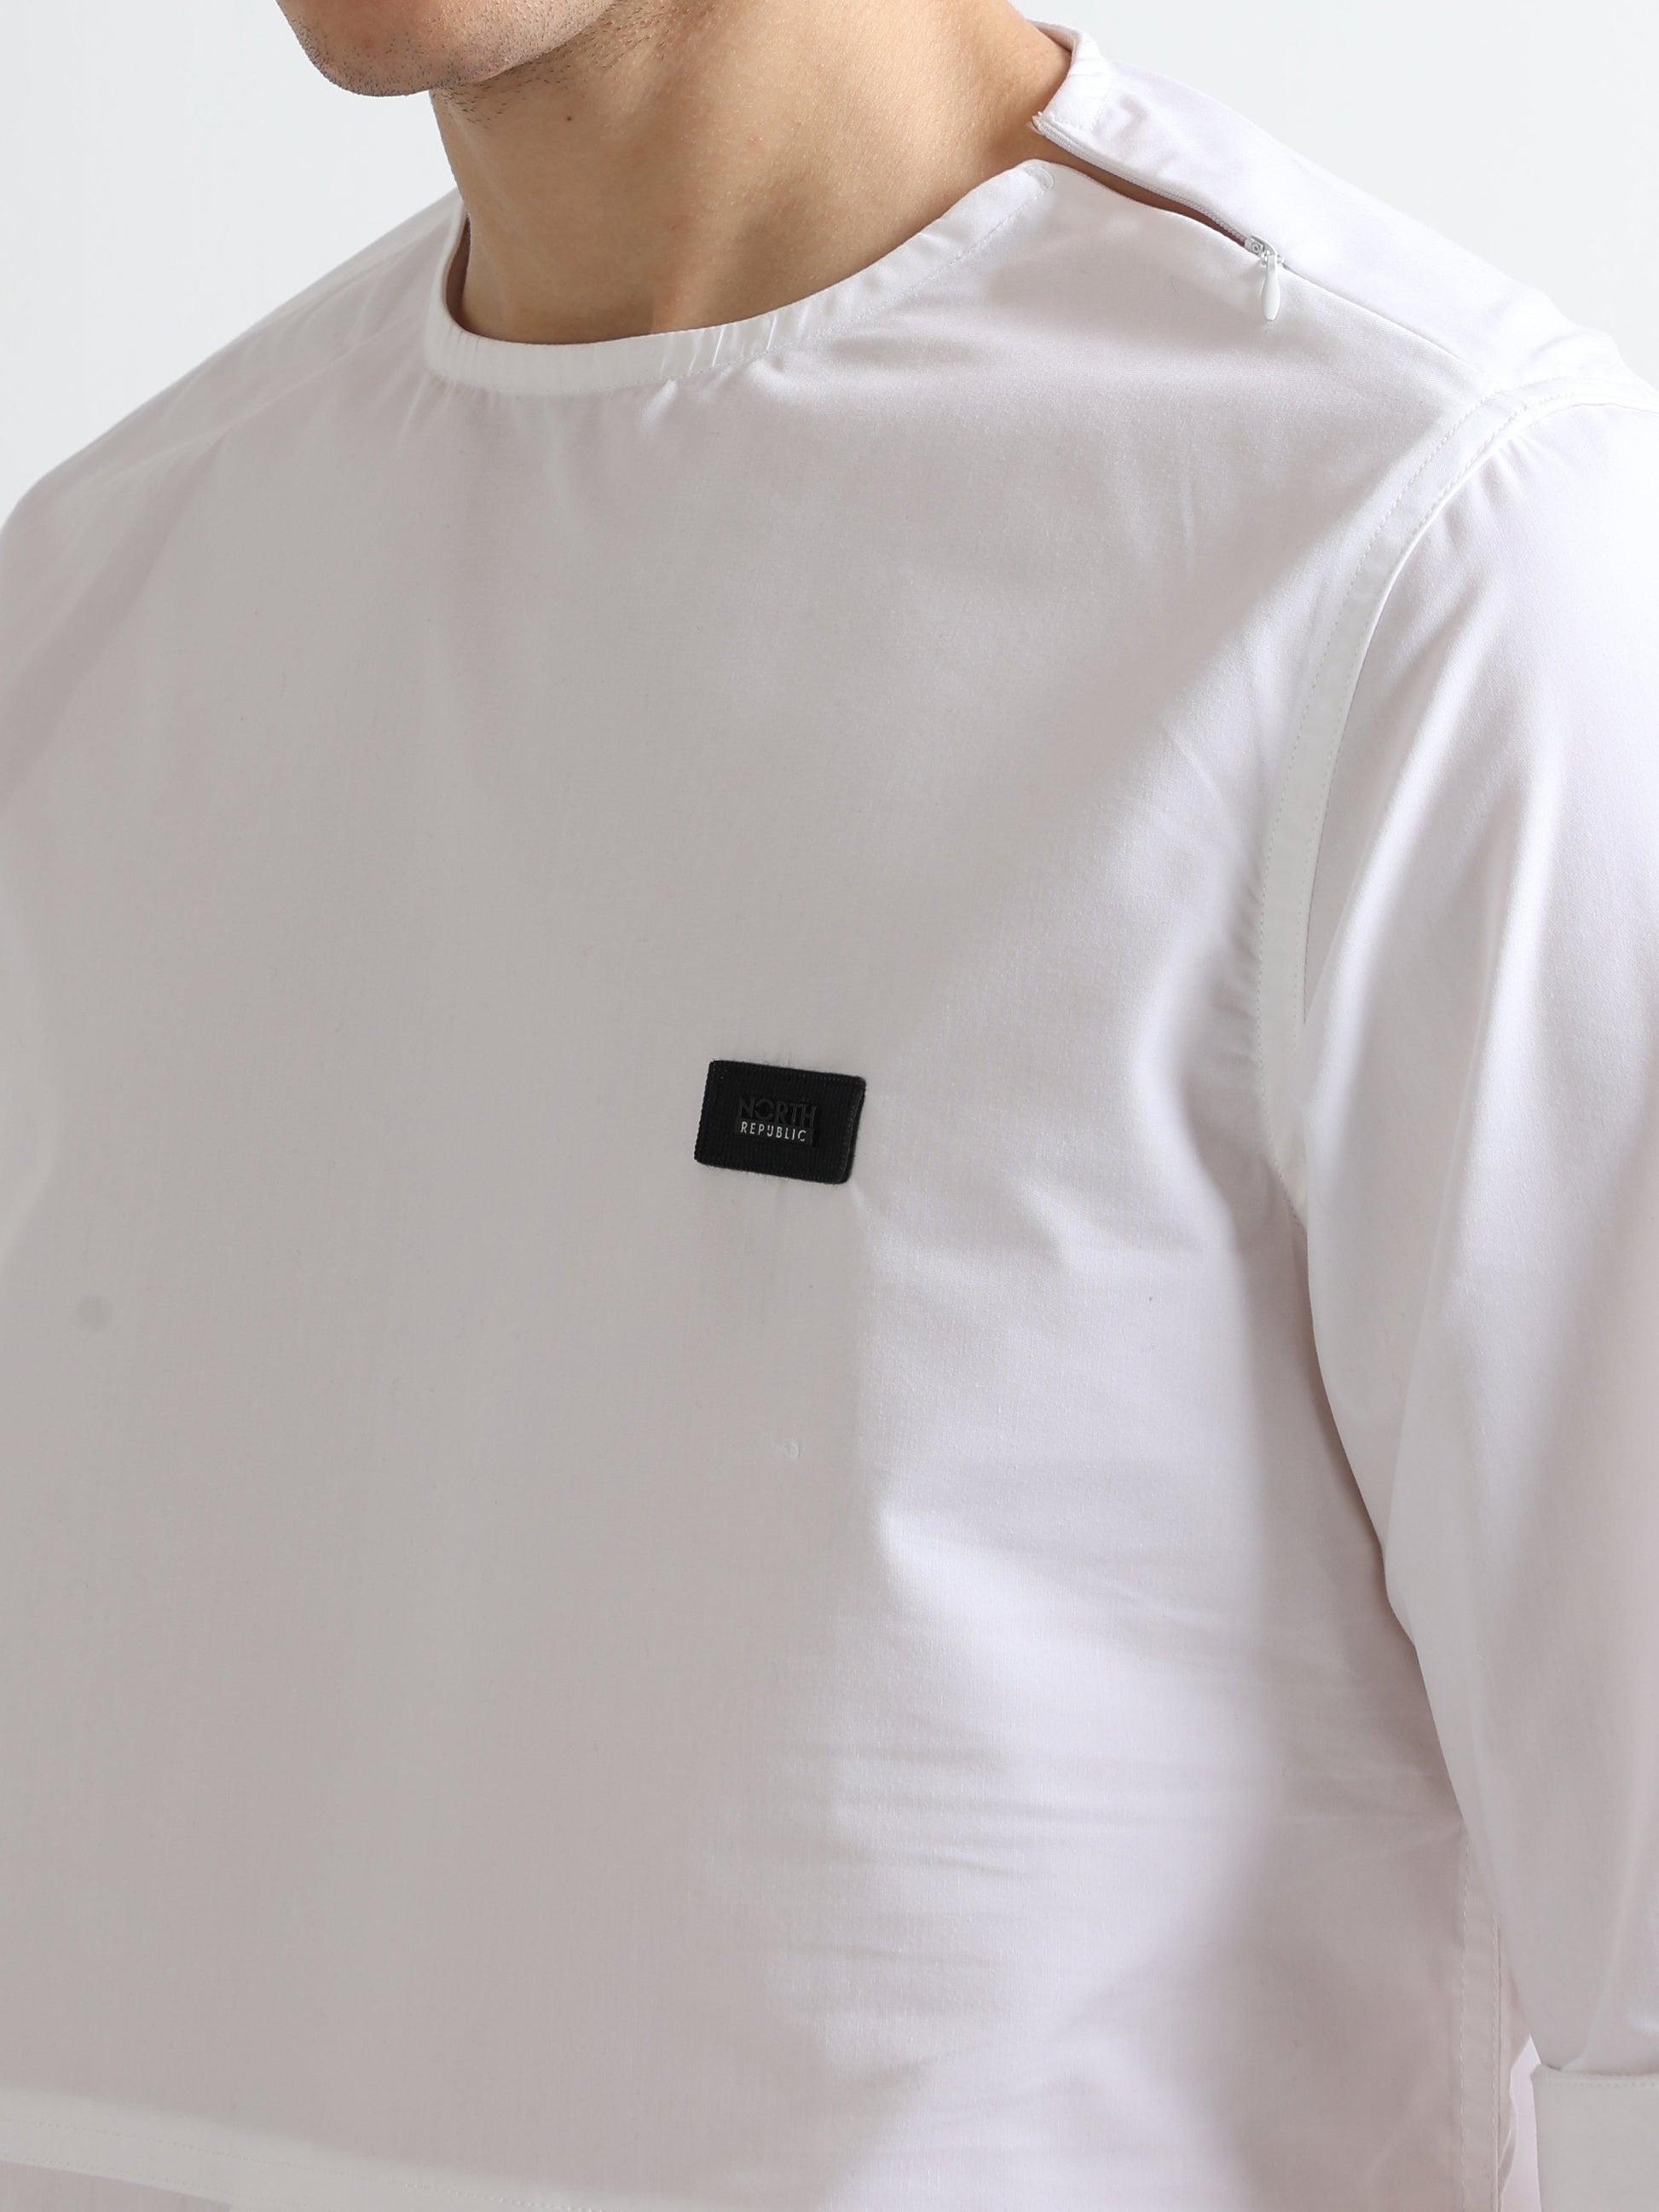 White Men's Stylish Side Pocket Crew Neck Plain Shirt